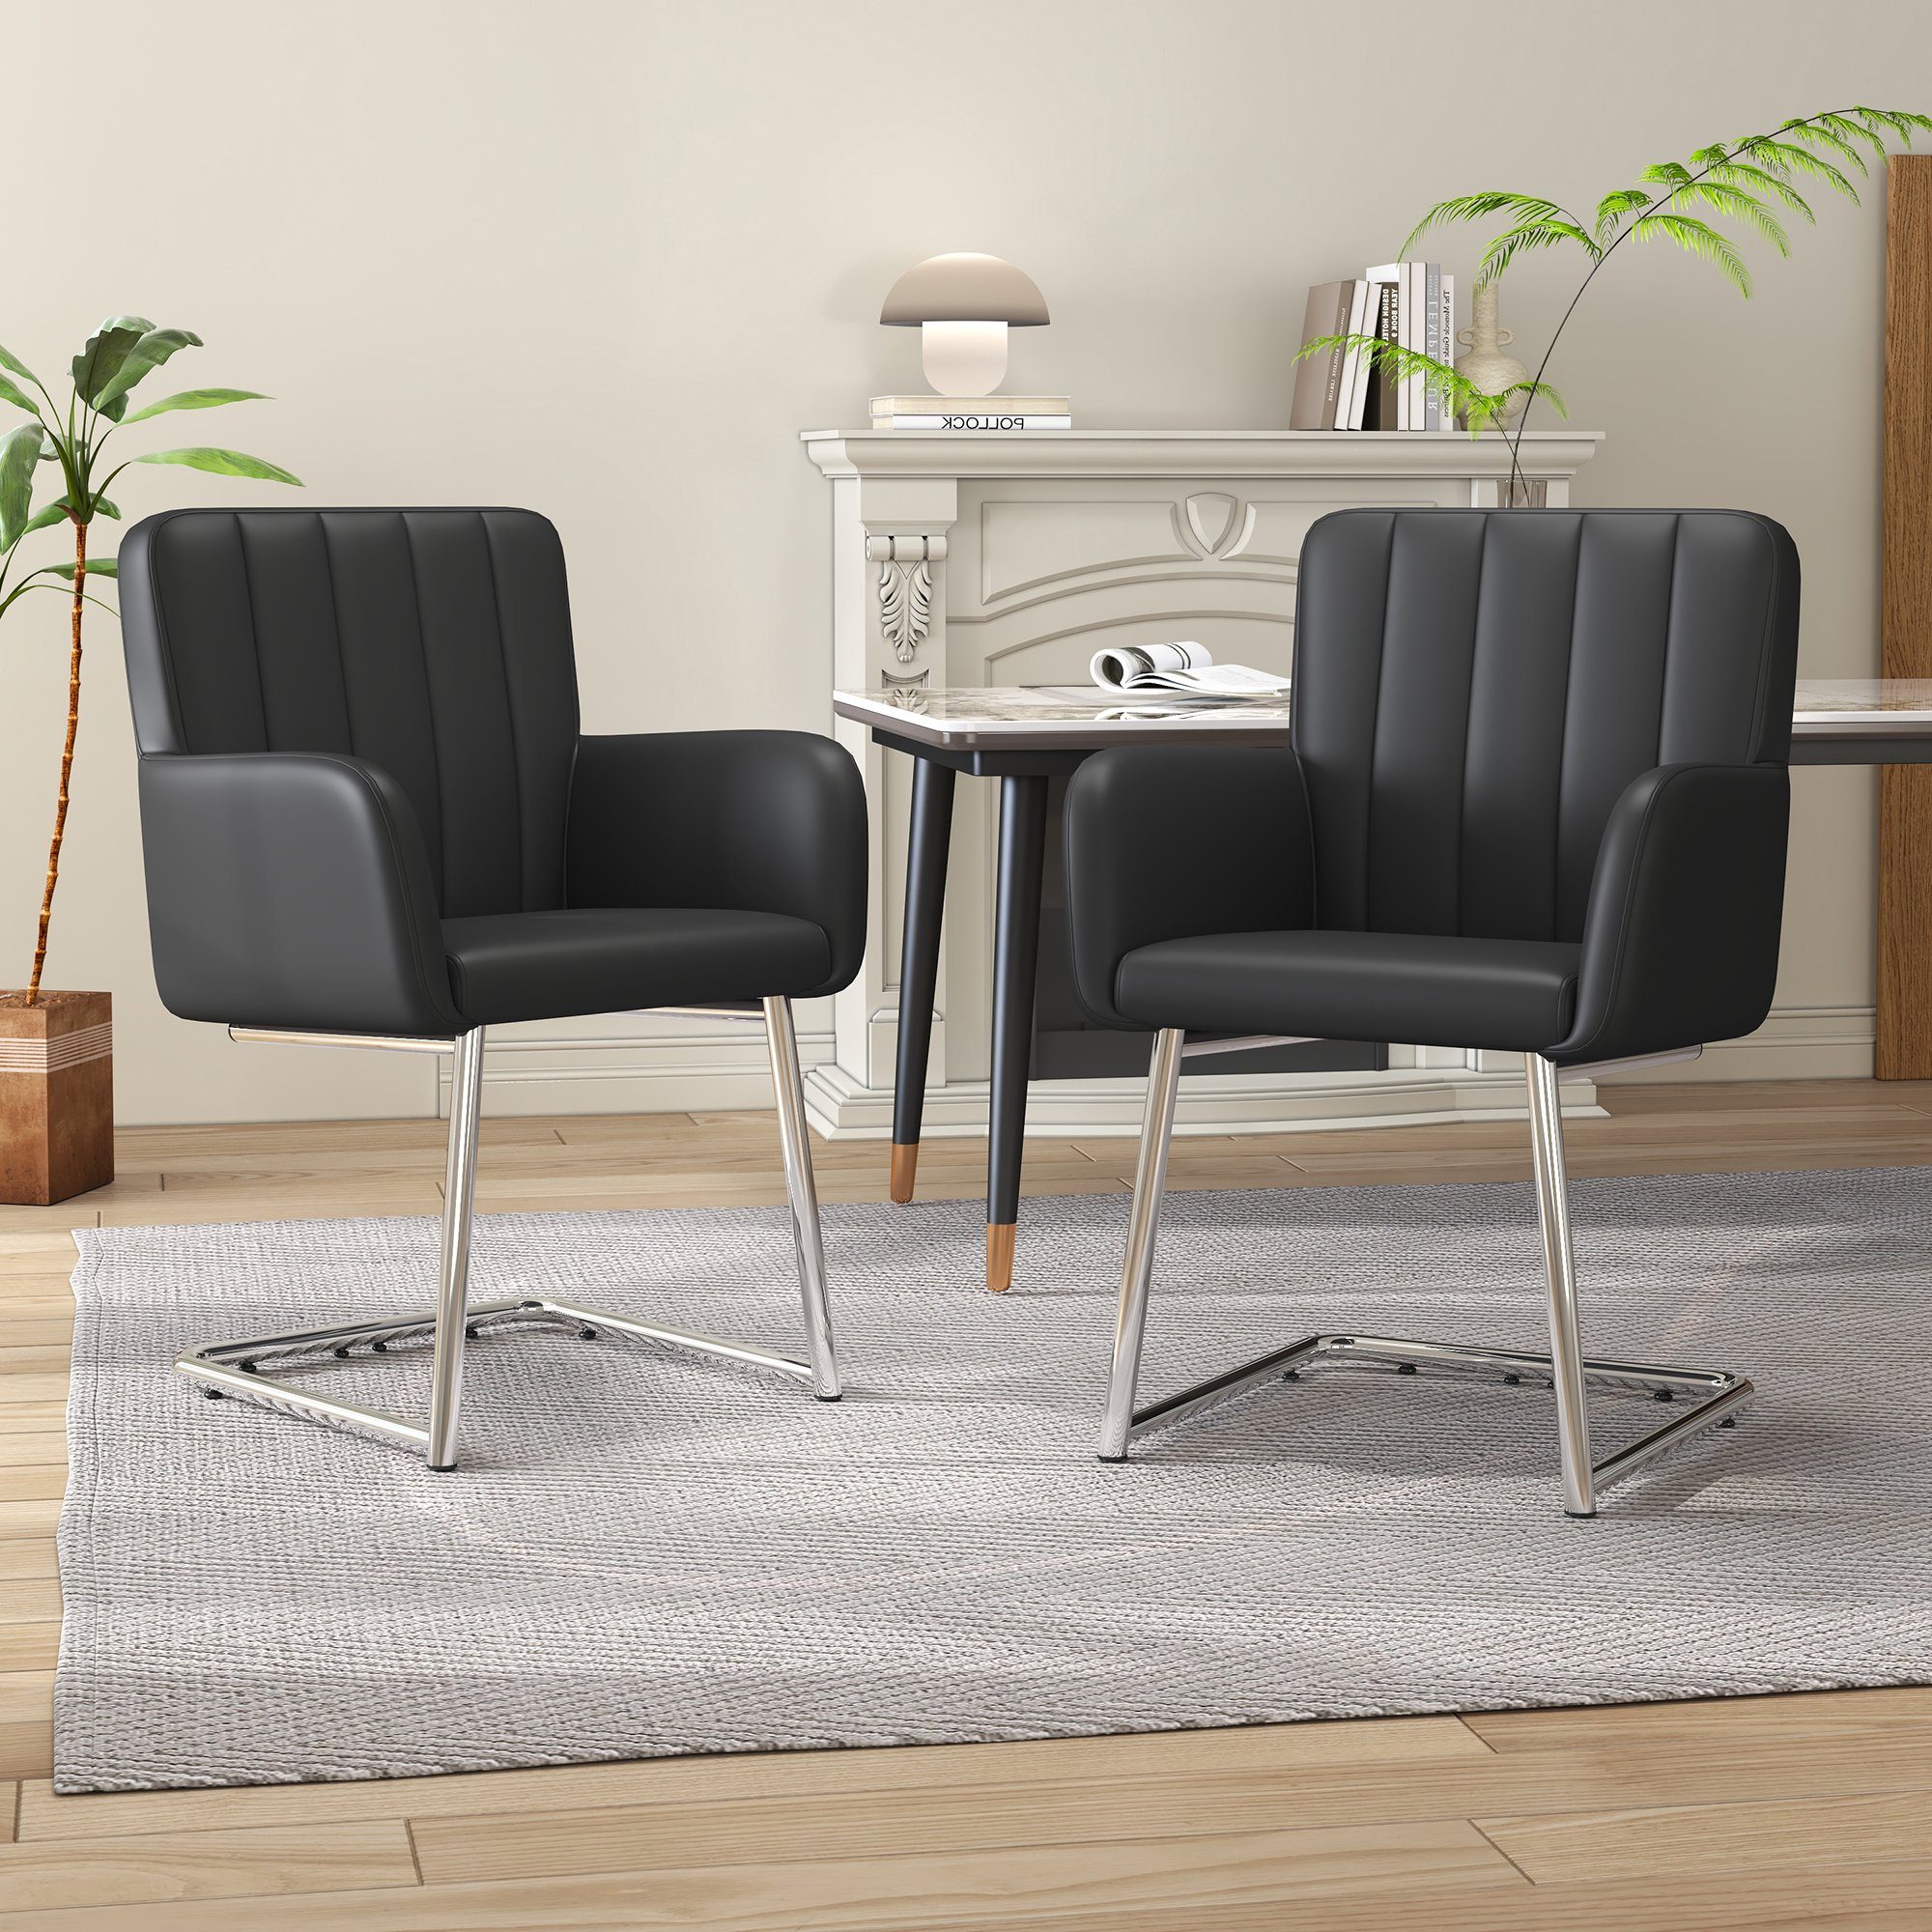 Odikalo Esszimmerstuhl 2er Set Sessel gepolstert zickzackform Metallbeine Leder schwarz/grau